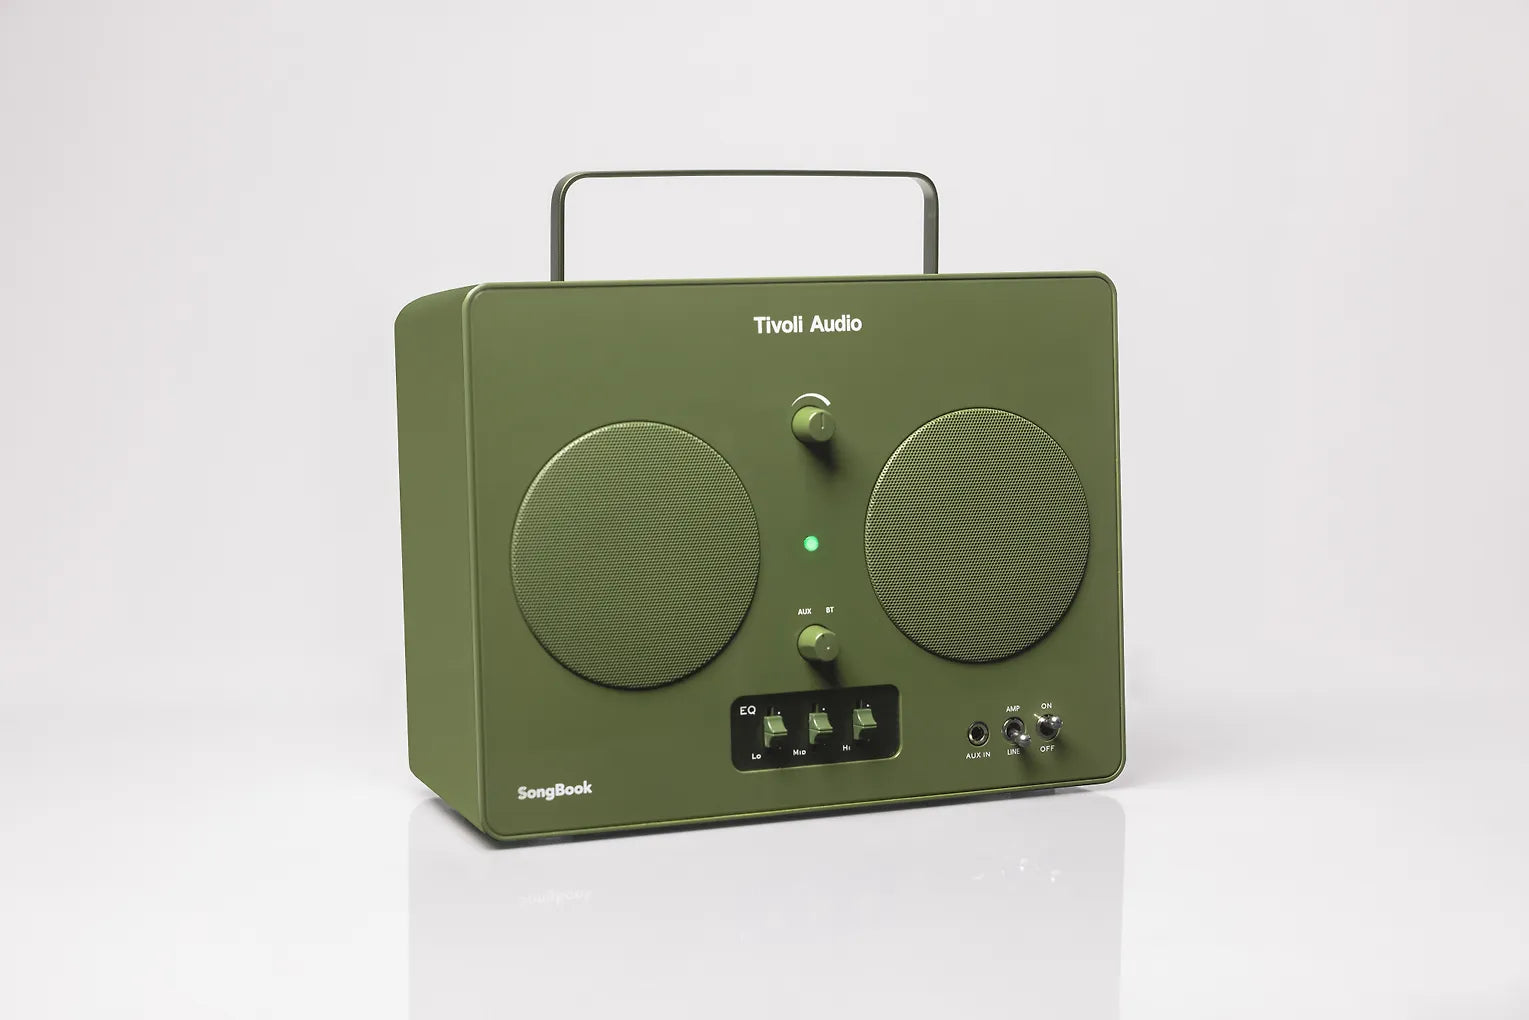 Tivoli Audio SongBook Bluetooth speaker